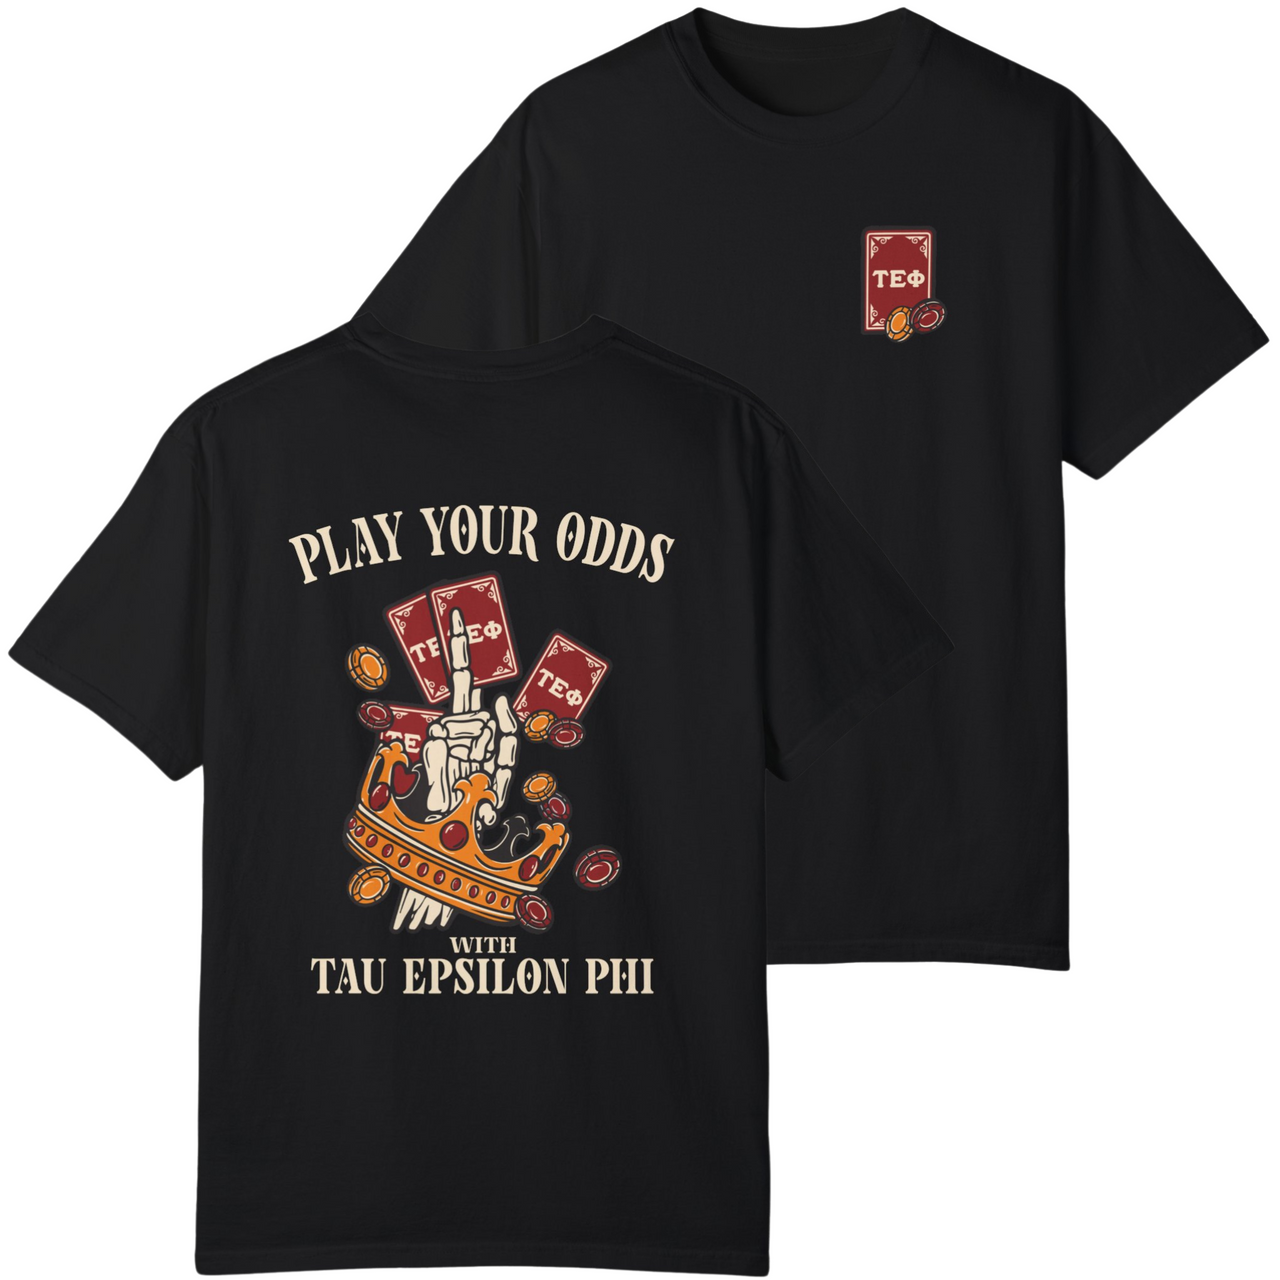 Tau Epsilon Phi Graphic T-Shirt | Play Your Odds